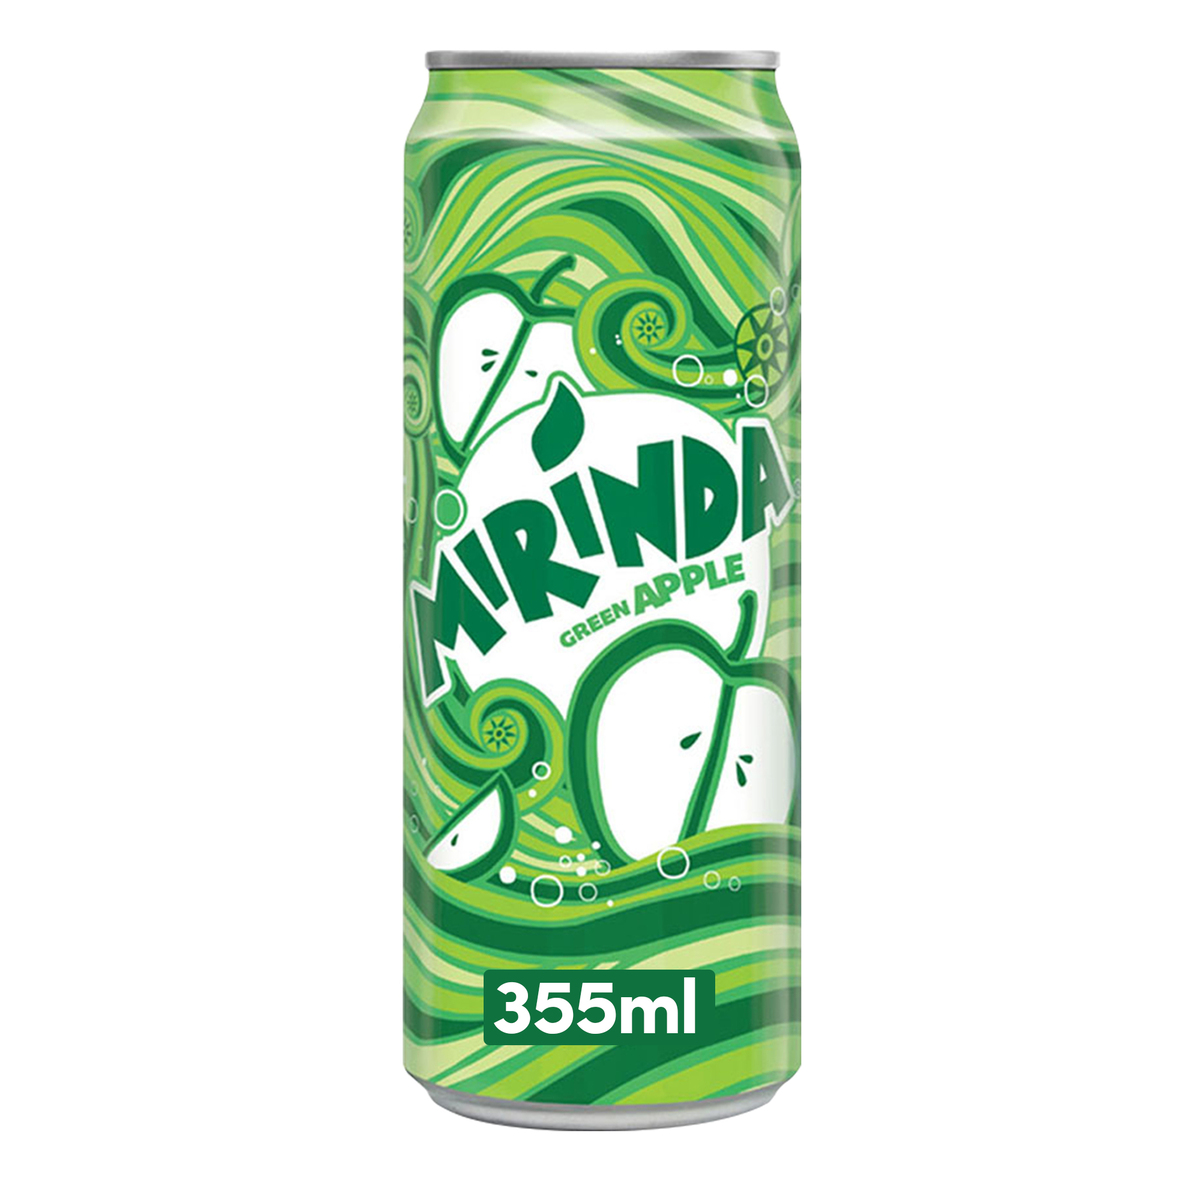 Mirinda Green Apple Carbonated Soft Drink Can 6 x 355 ml